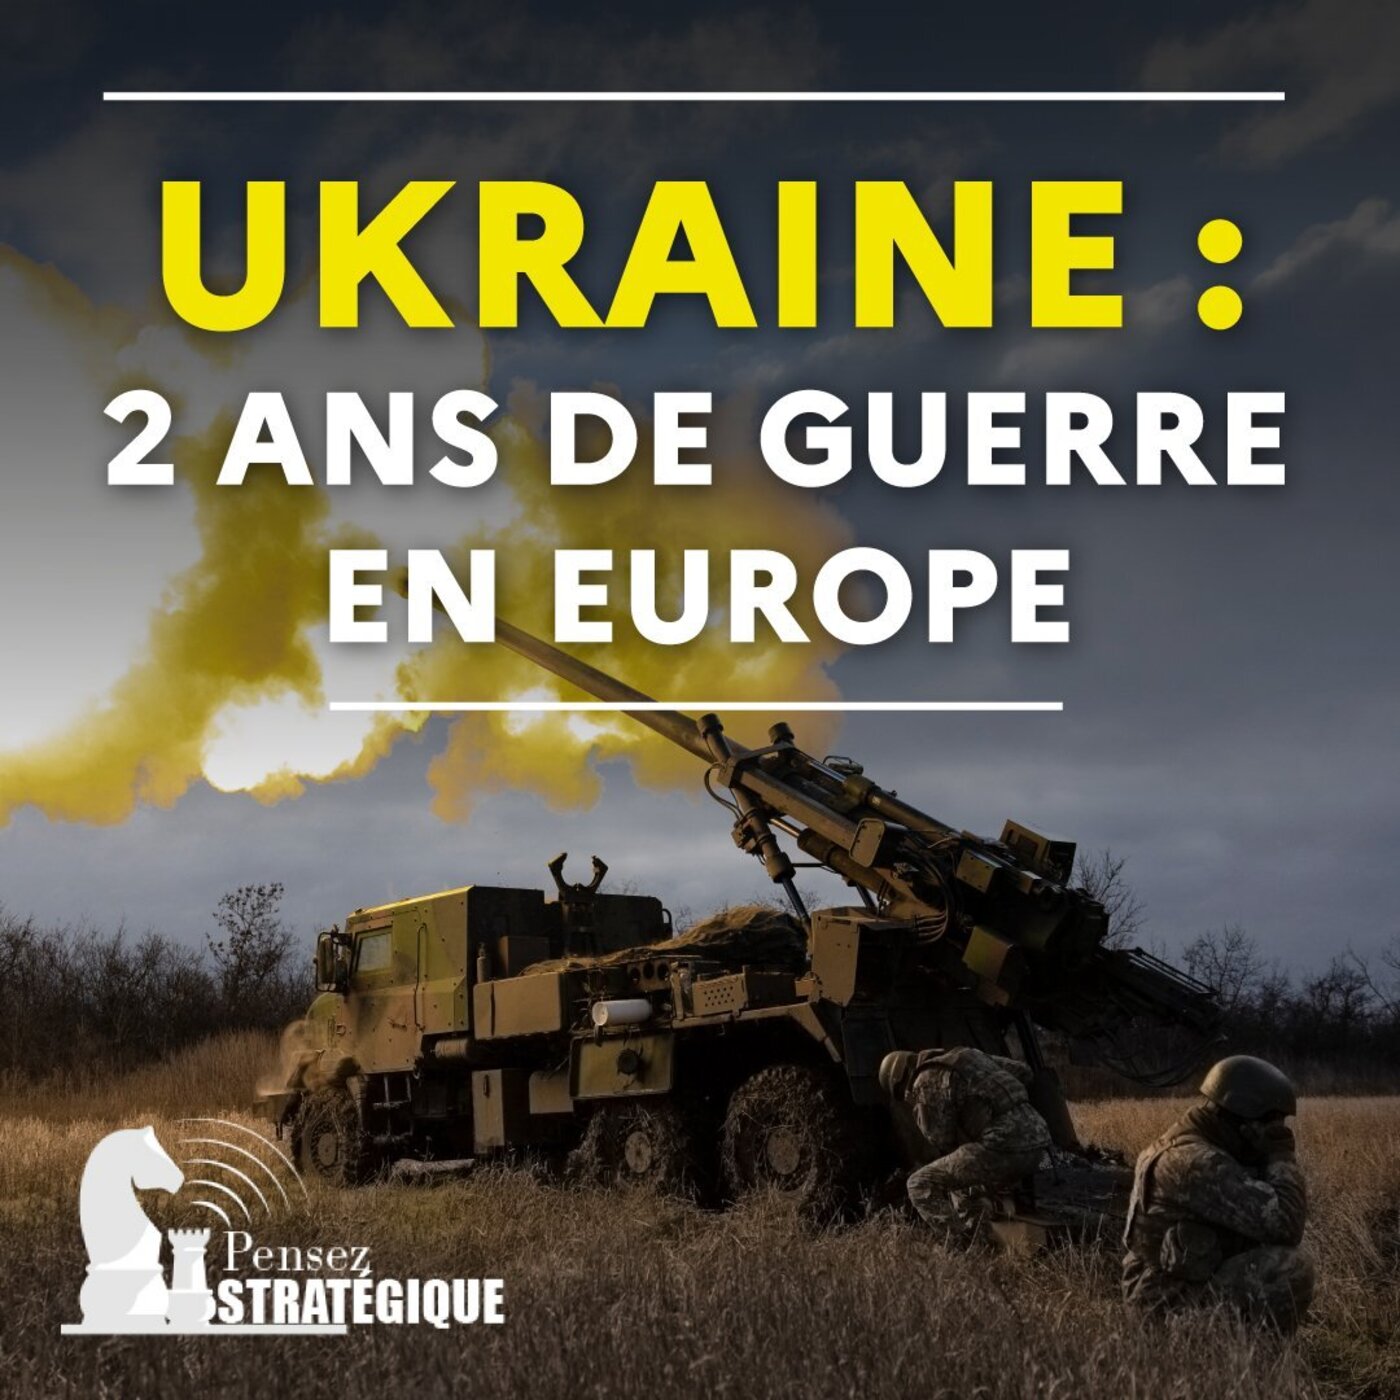 ukraine deux ans de guerre en europe pensez strategique.jpg.cdb3d597cdd1fb5d6f925ee8dd7720ff